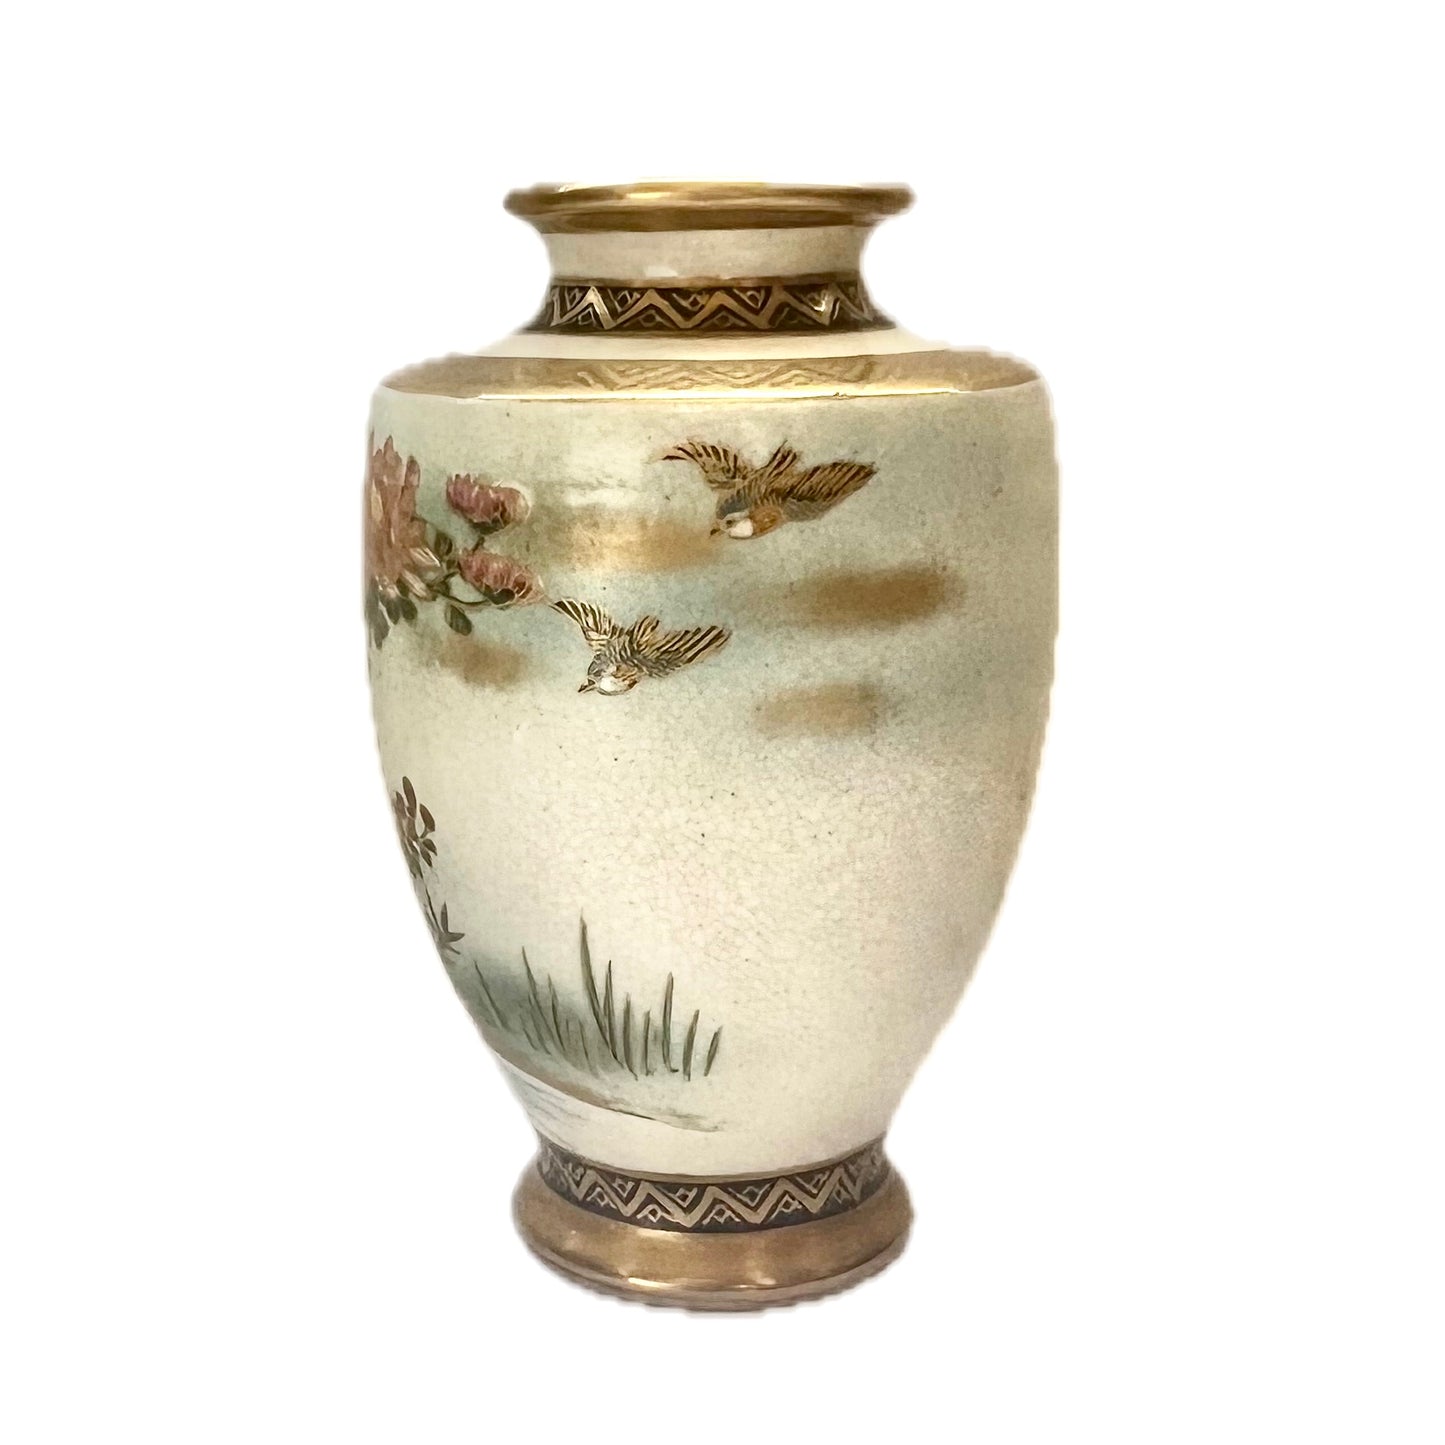 Pair of antique Satsuma porcelain vases circa Meiji period, mid to late 19th century